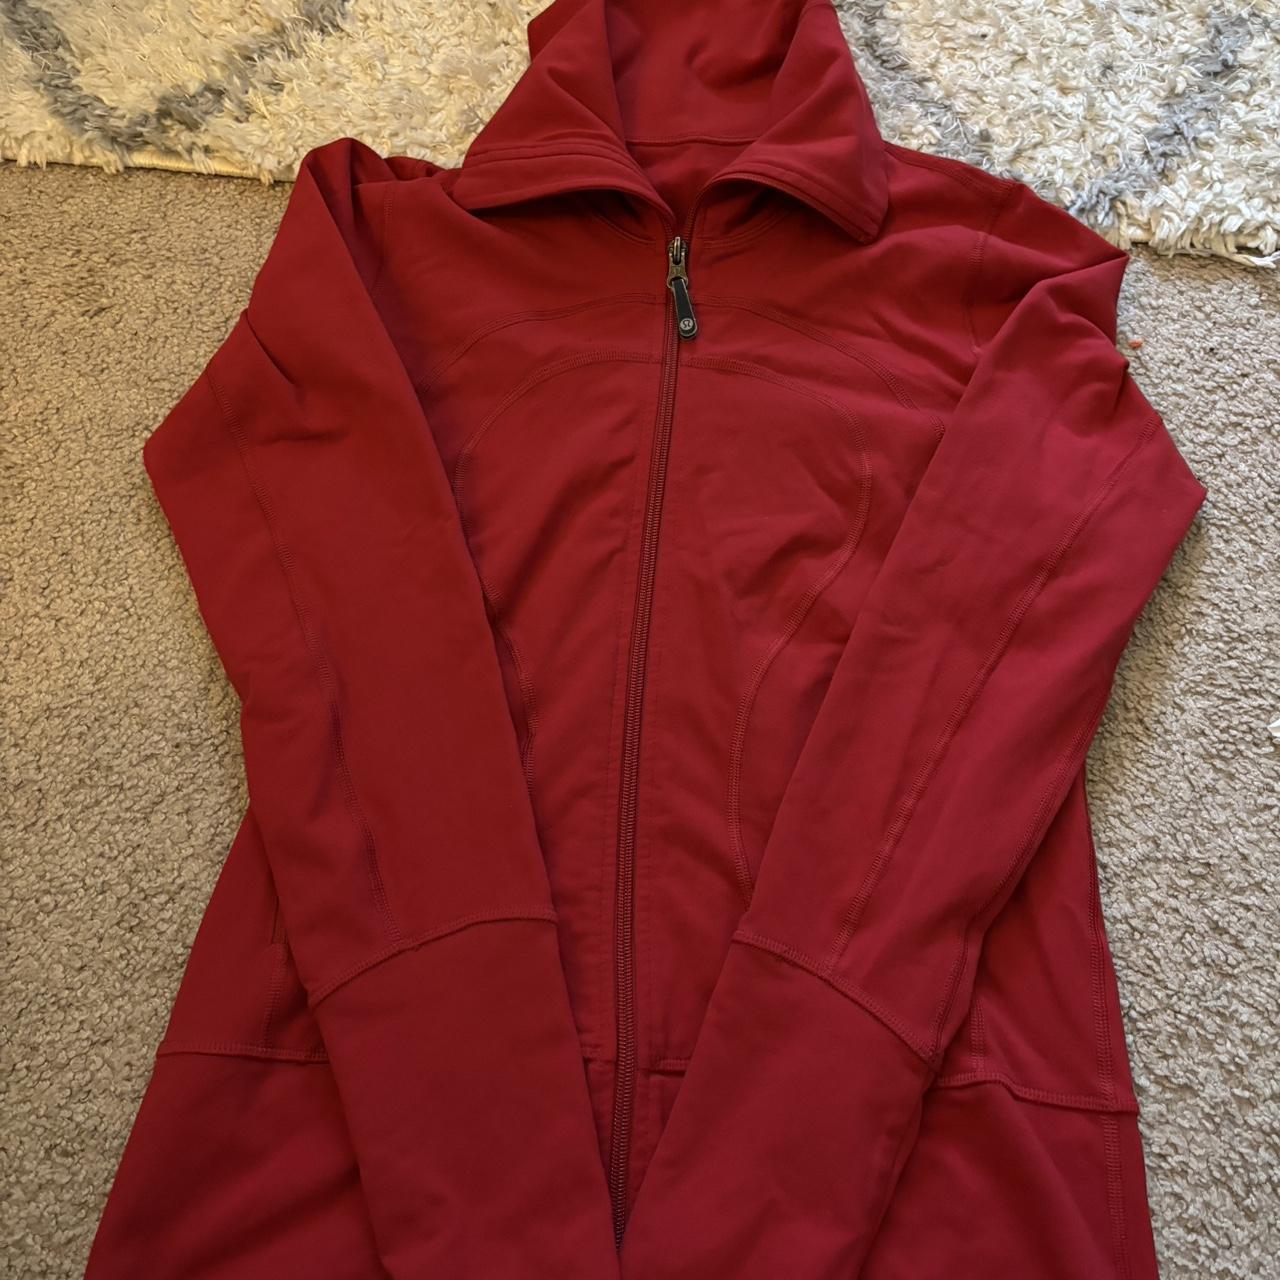 Lululemon Women's Red Jacket (5)